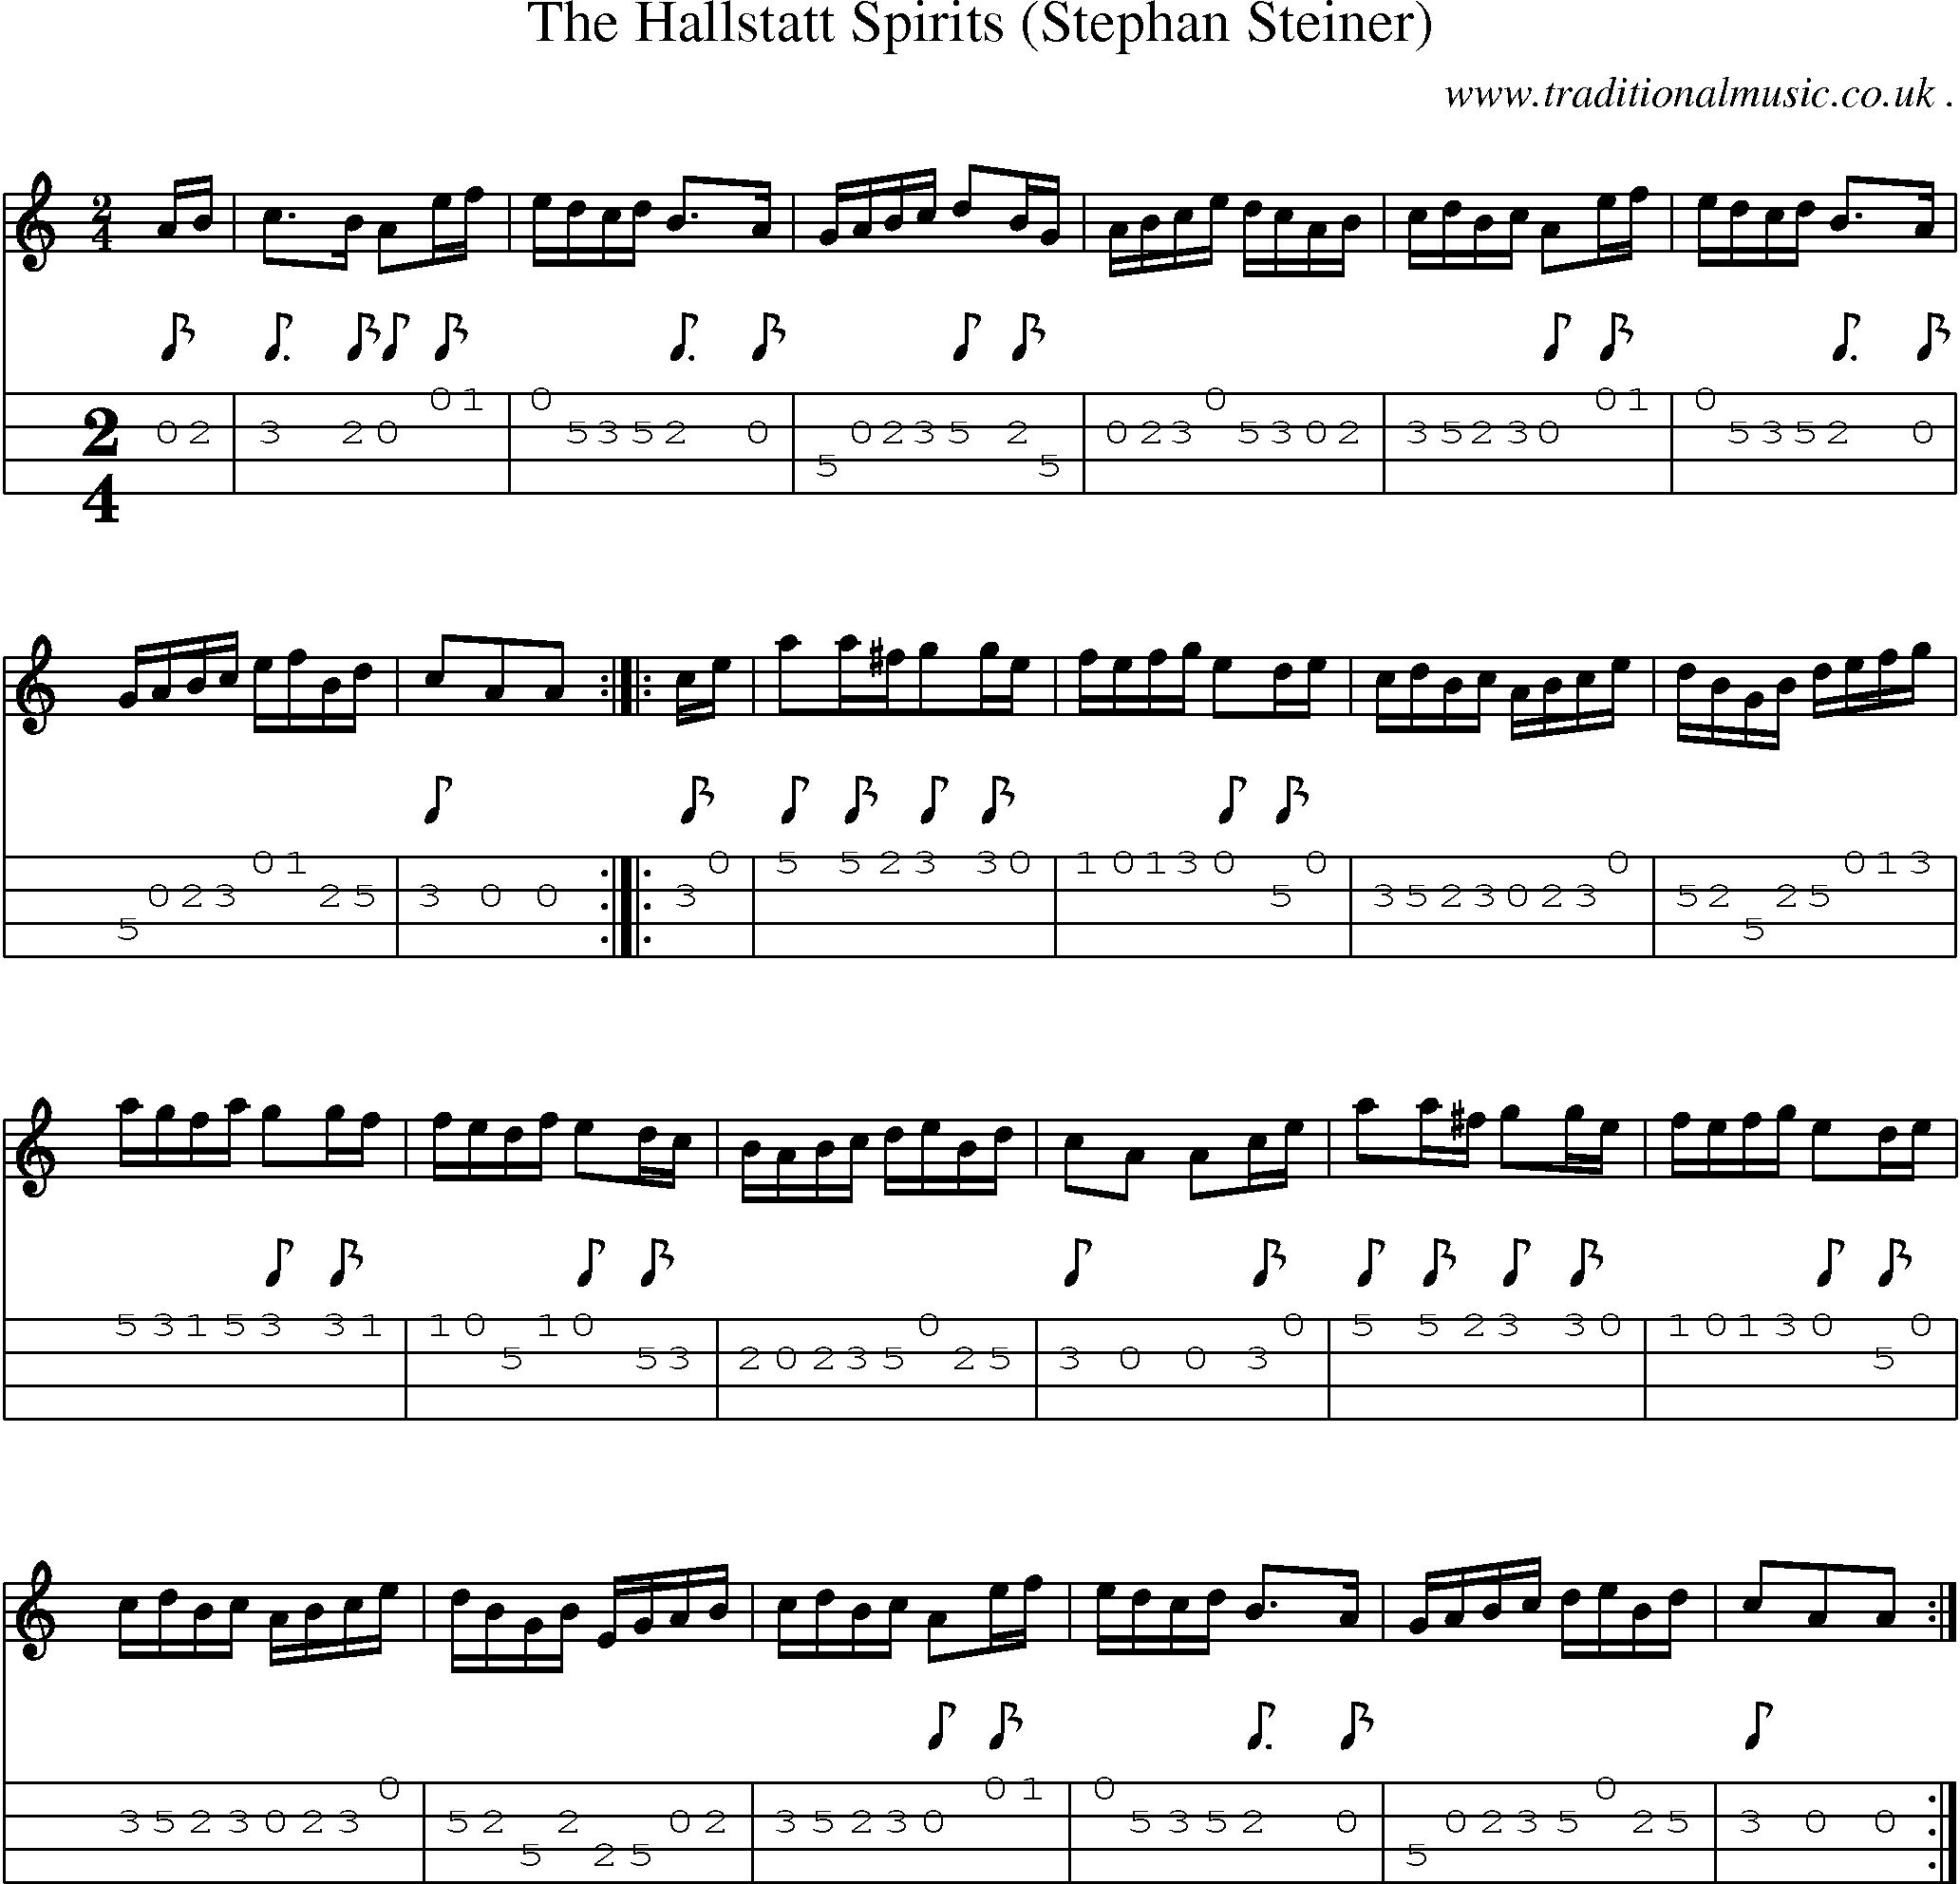 Sheet-Music and Mandolin Tabs for The Hallstatt Spirits (stephan Steiner)